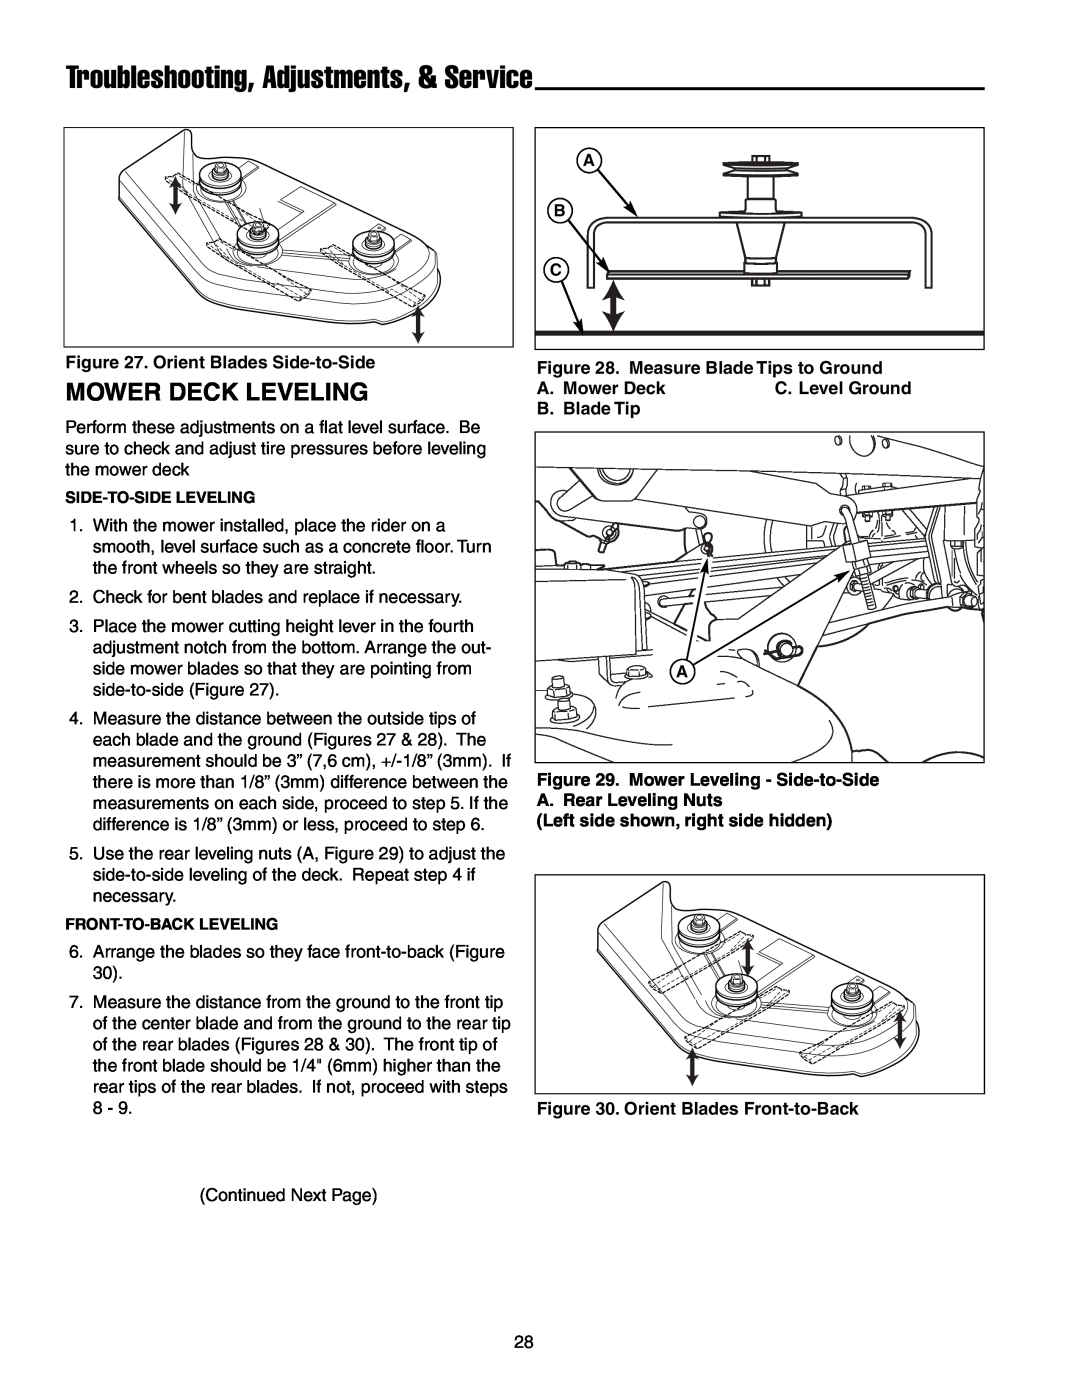 Snapper ERZT20441BVE2 manual Mower Deck Leveling, Troubleshooting, Adjustments, & Service, Side-To-Side Leveling 